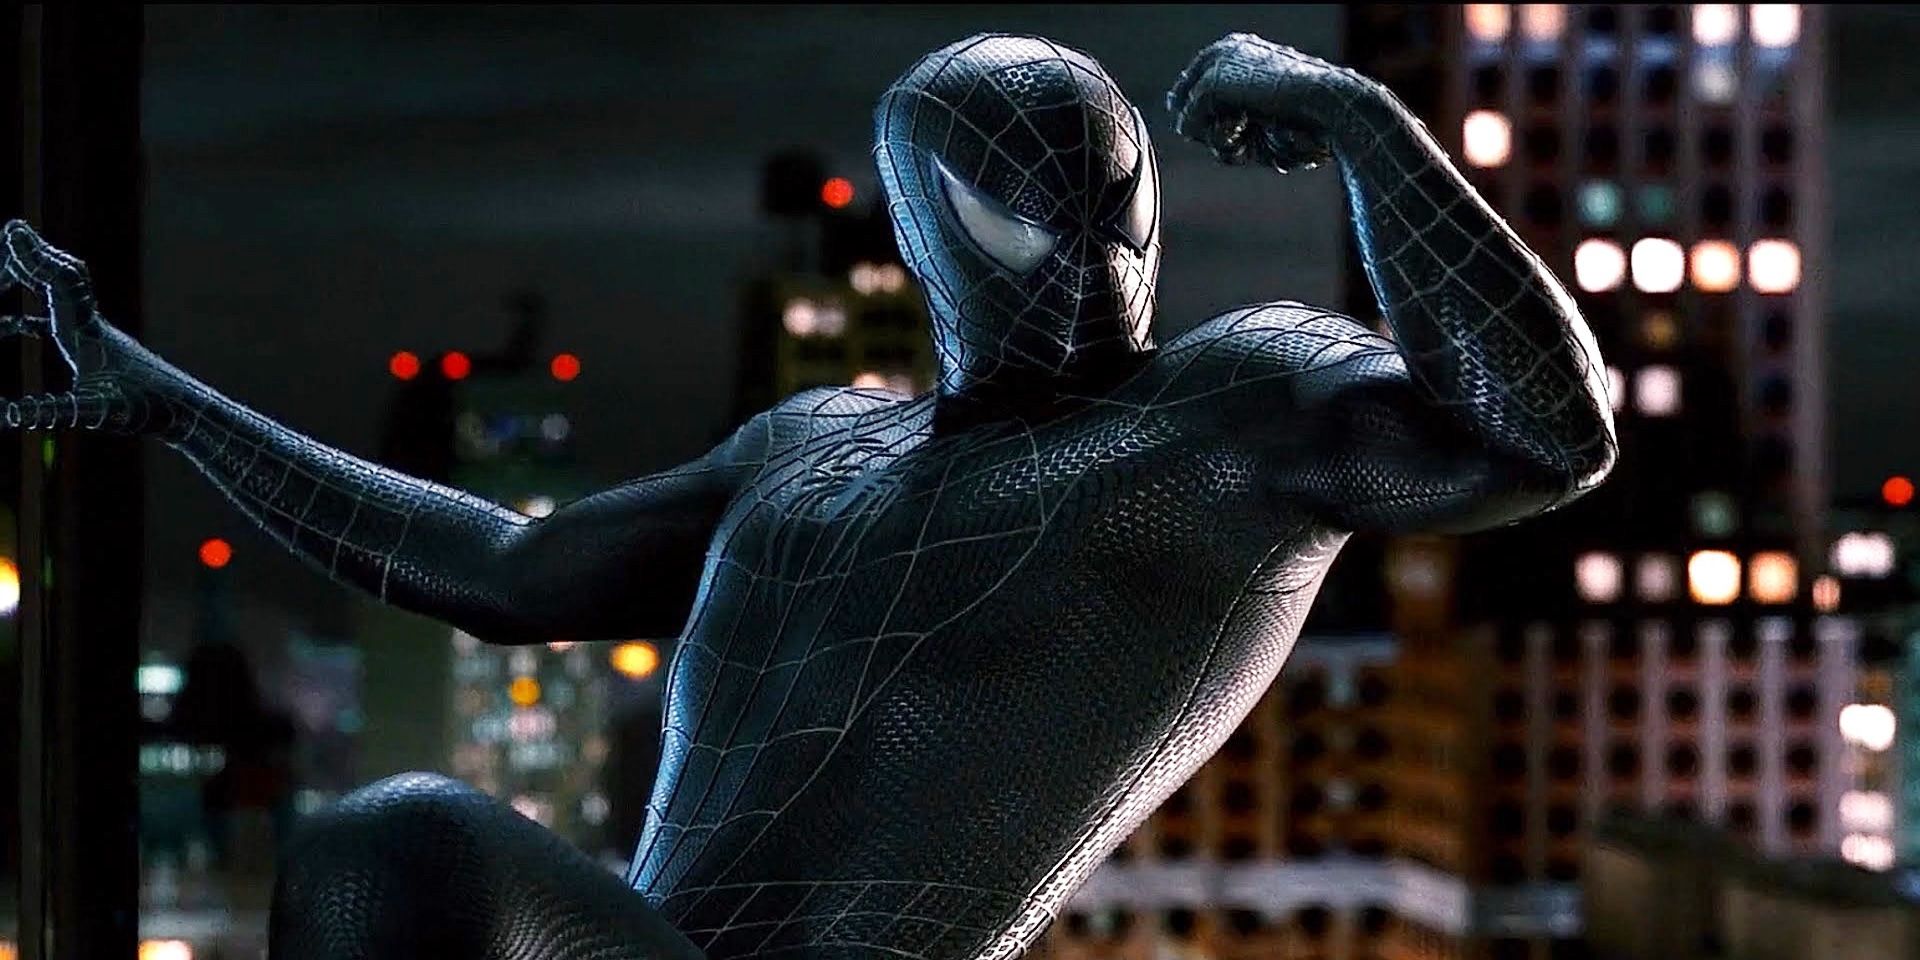 Spider-Man in the black symbiote suit